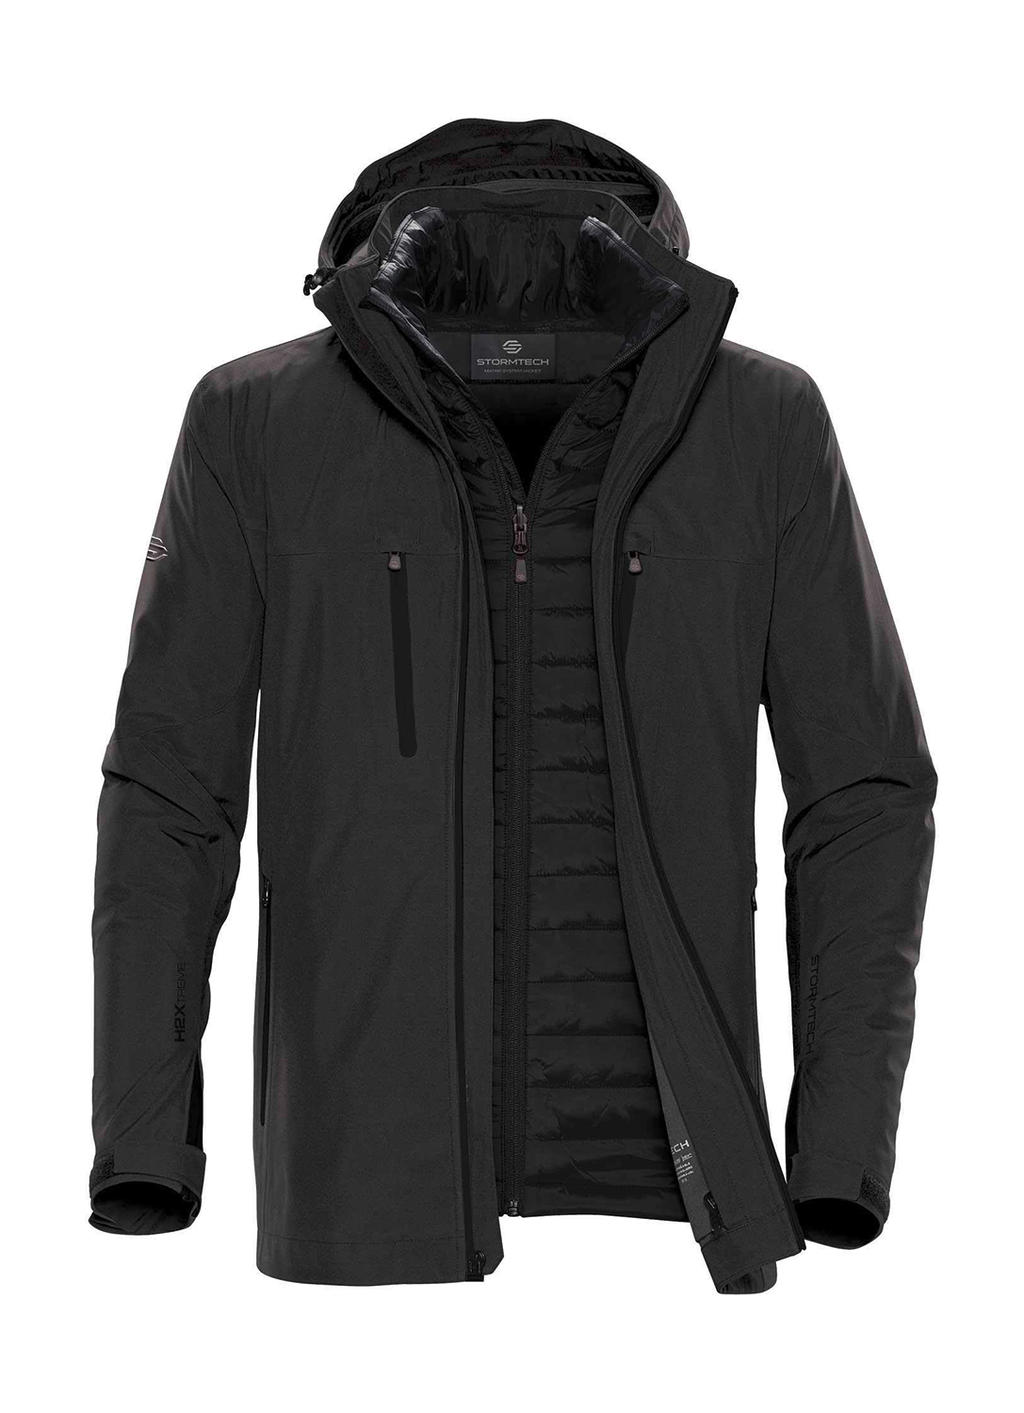  Mens Matrix System Jacket in Farbe Charcoal Twill/Black